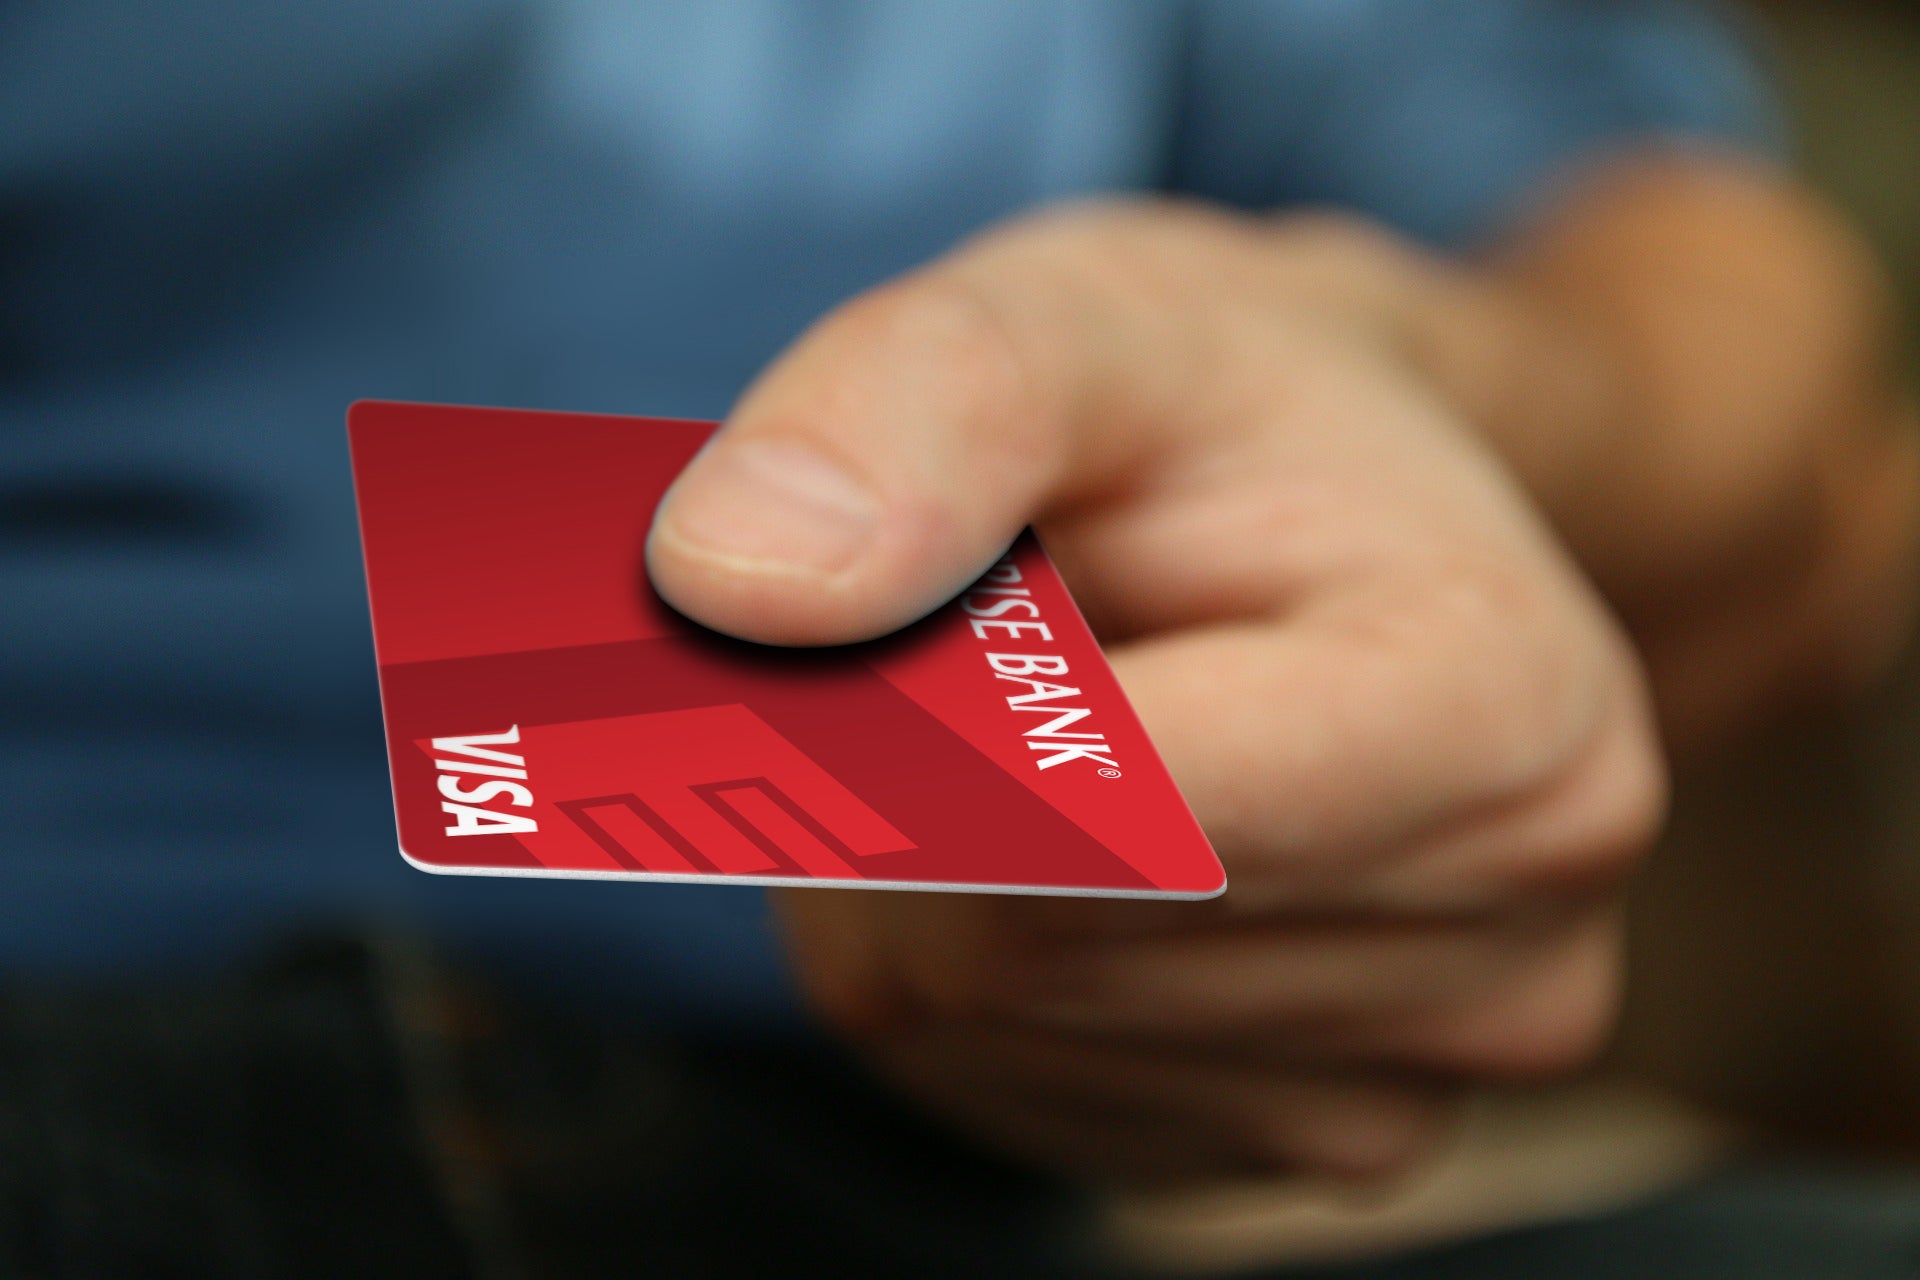 Customer holds business debit card